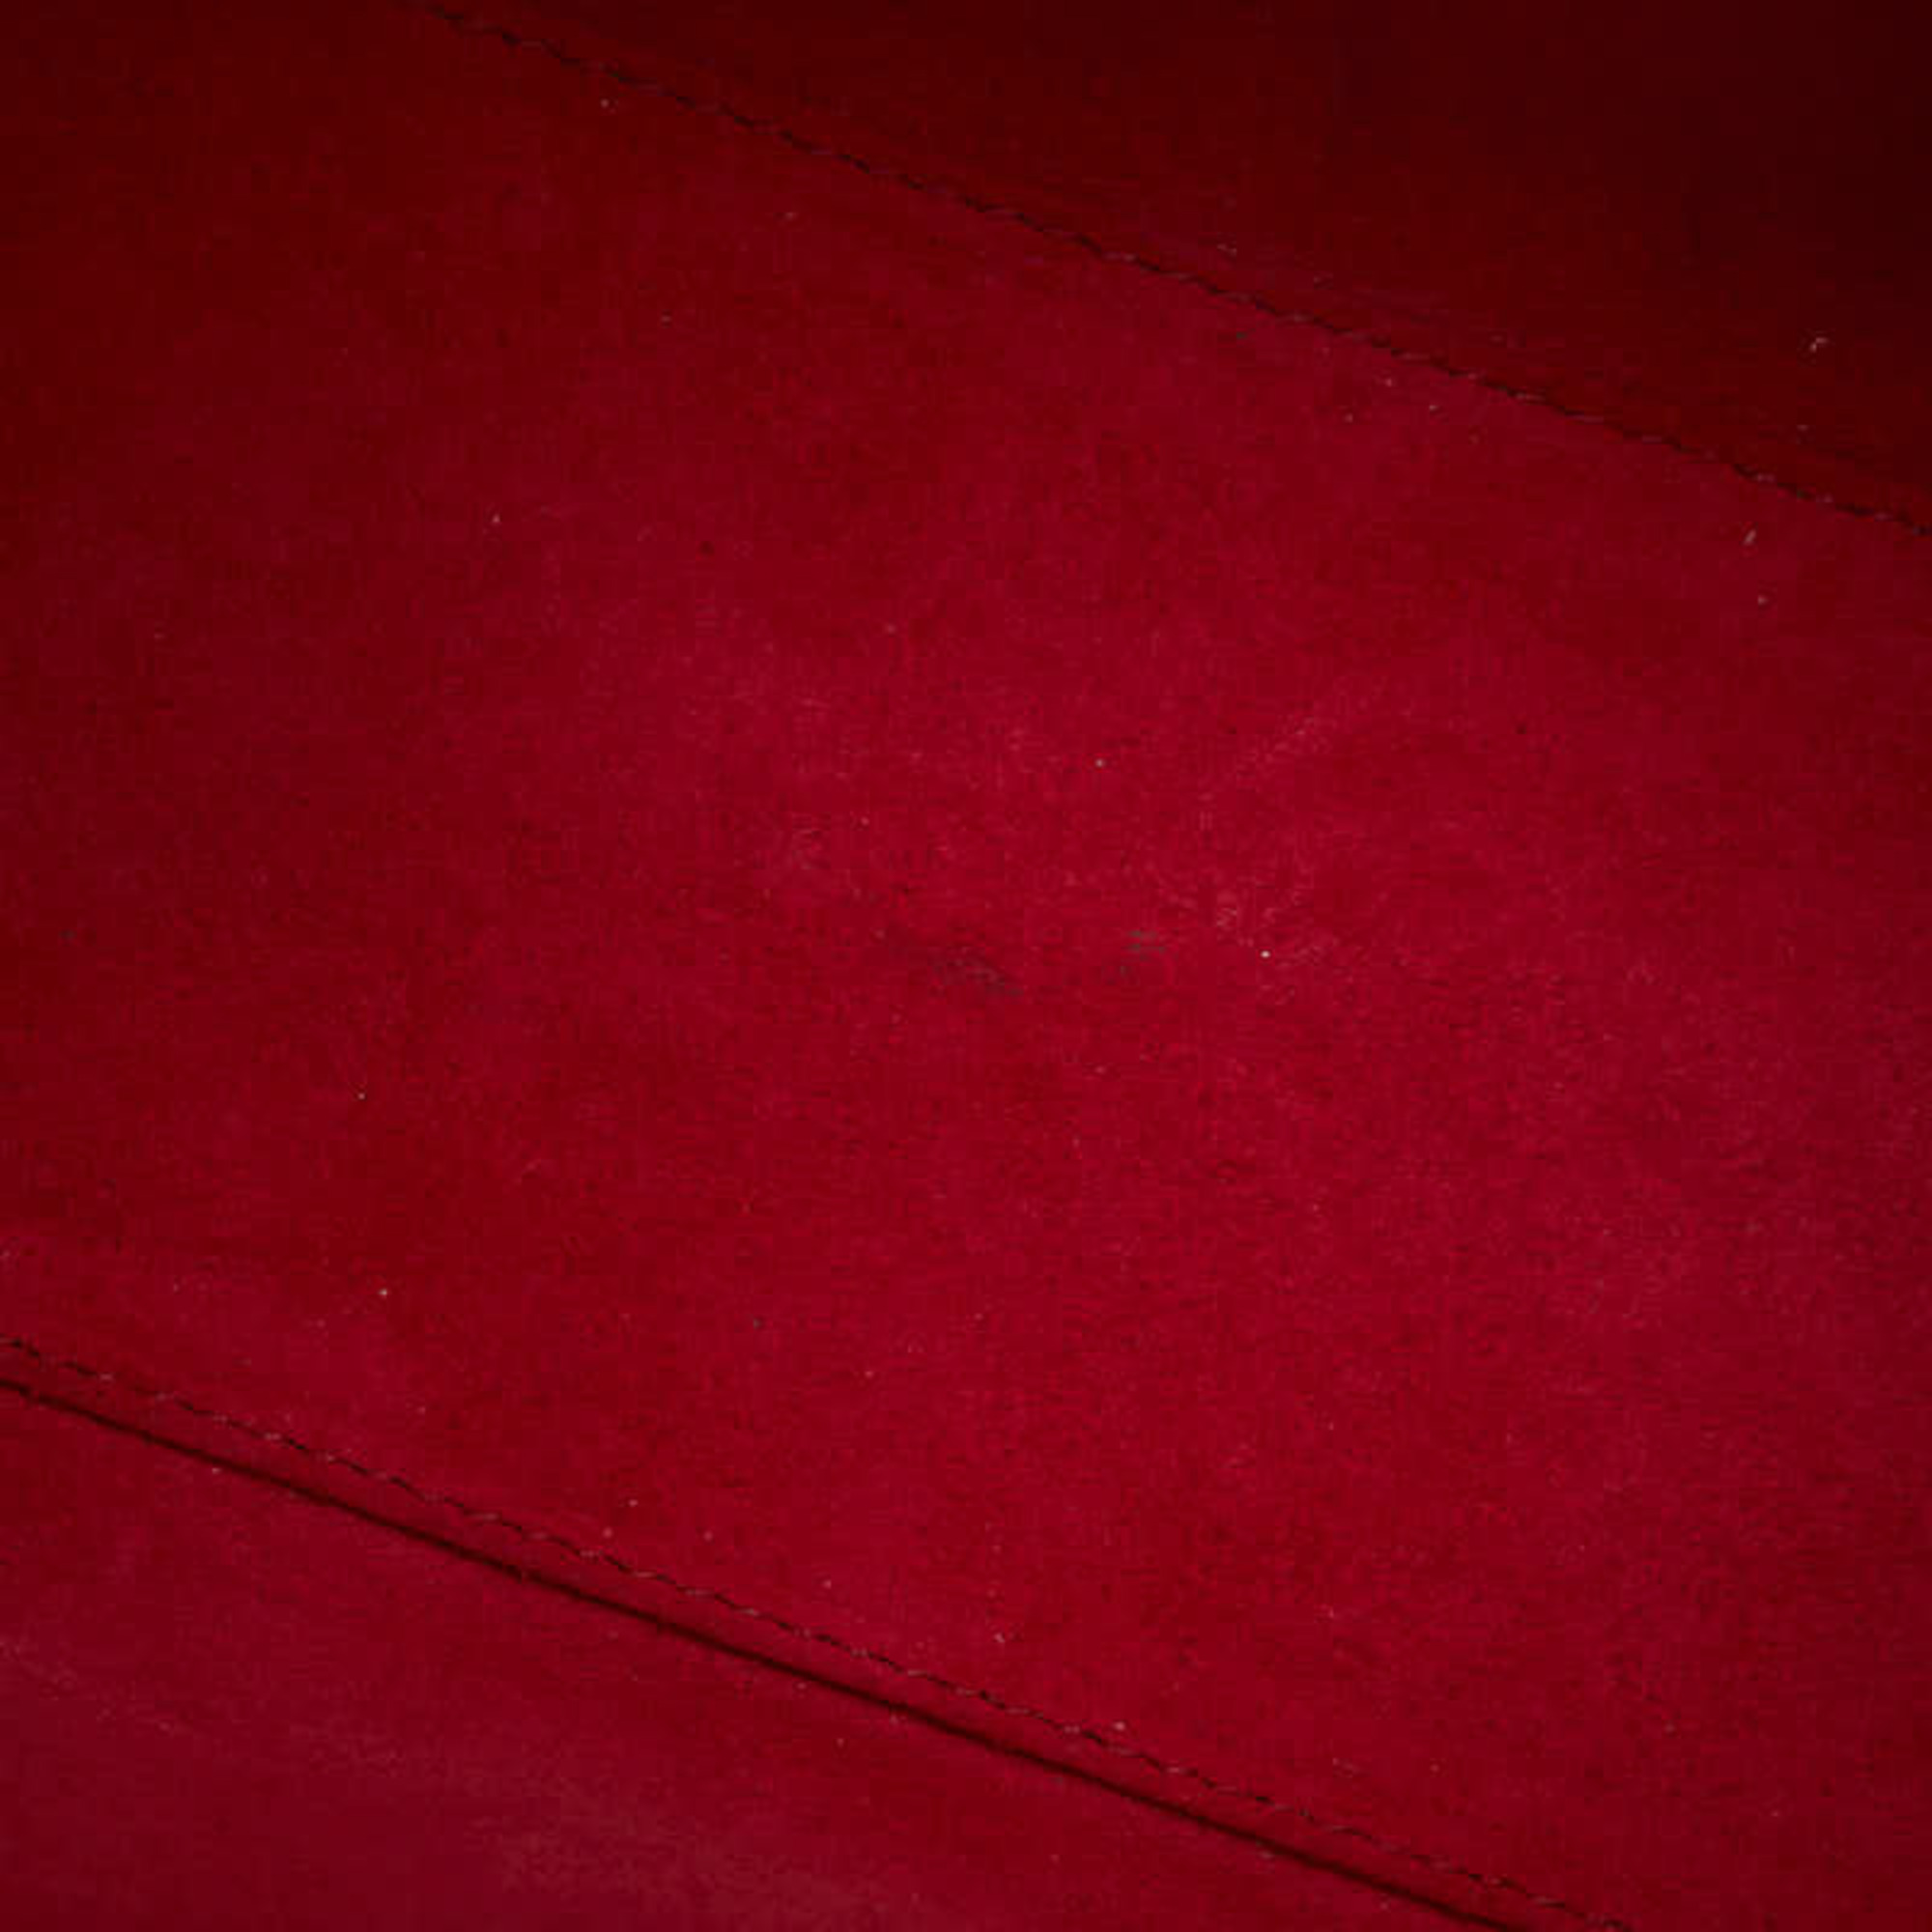 Saint Laurent Baby Duffle Handbag Shoulder Bag Red Leather Women's SAINT LAURENT